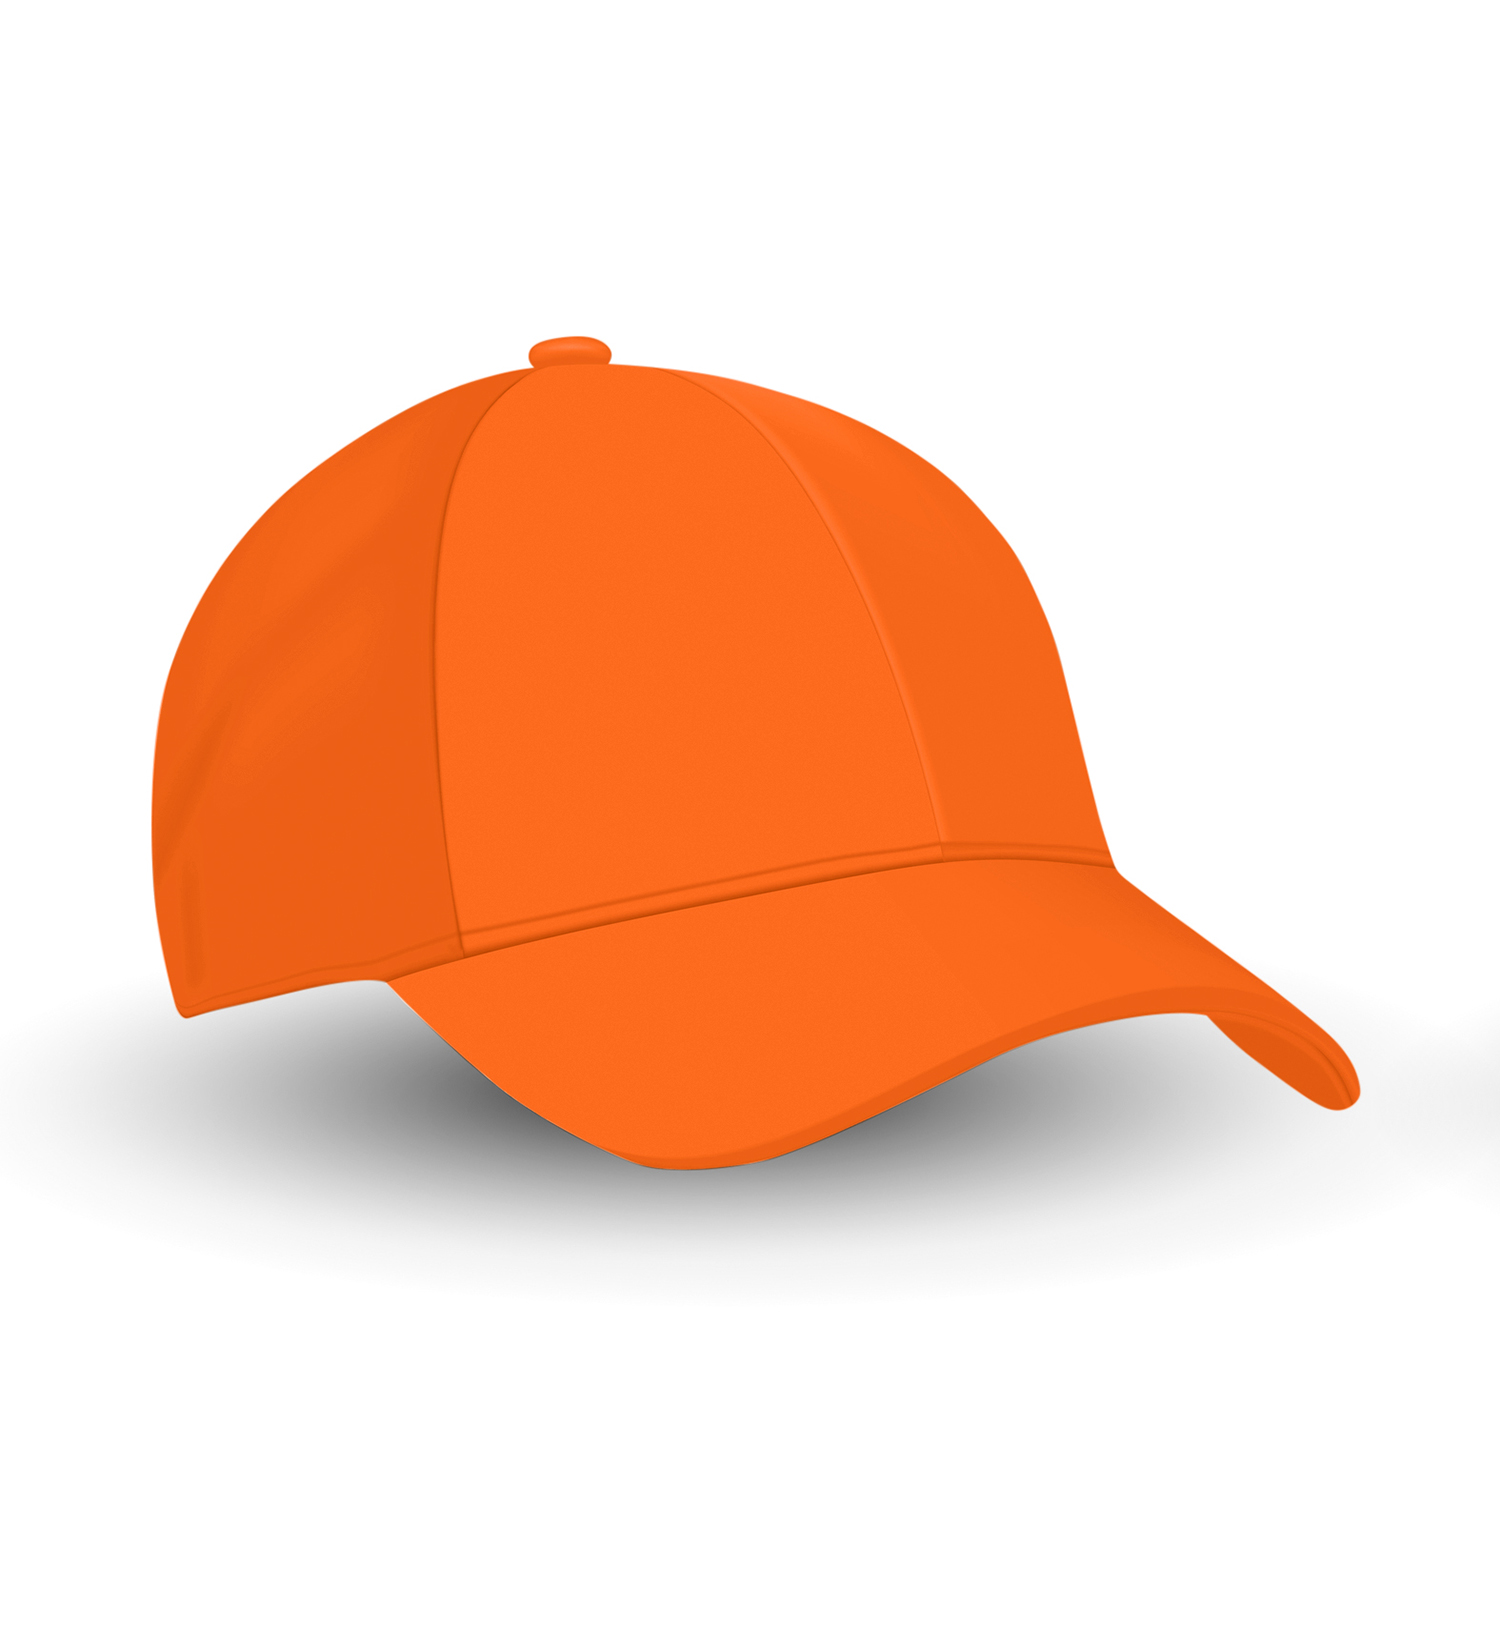 Pack of 15 Bulk Wholesale Plain Baseball Cap Hat Adjustable (Orange) - image 3 of 4